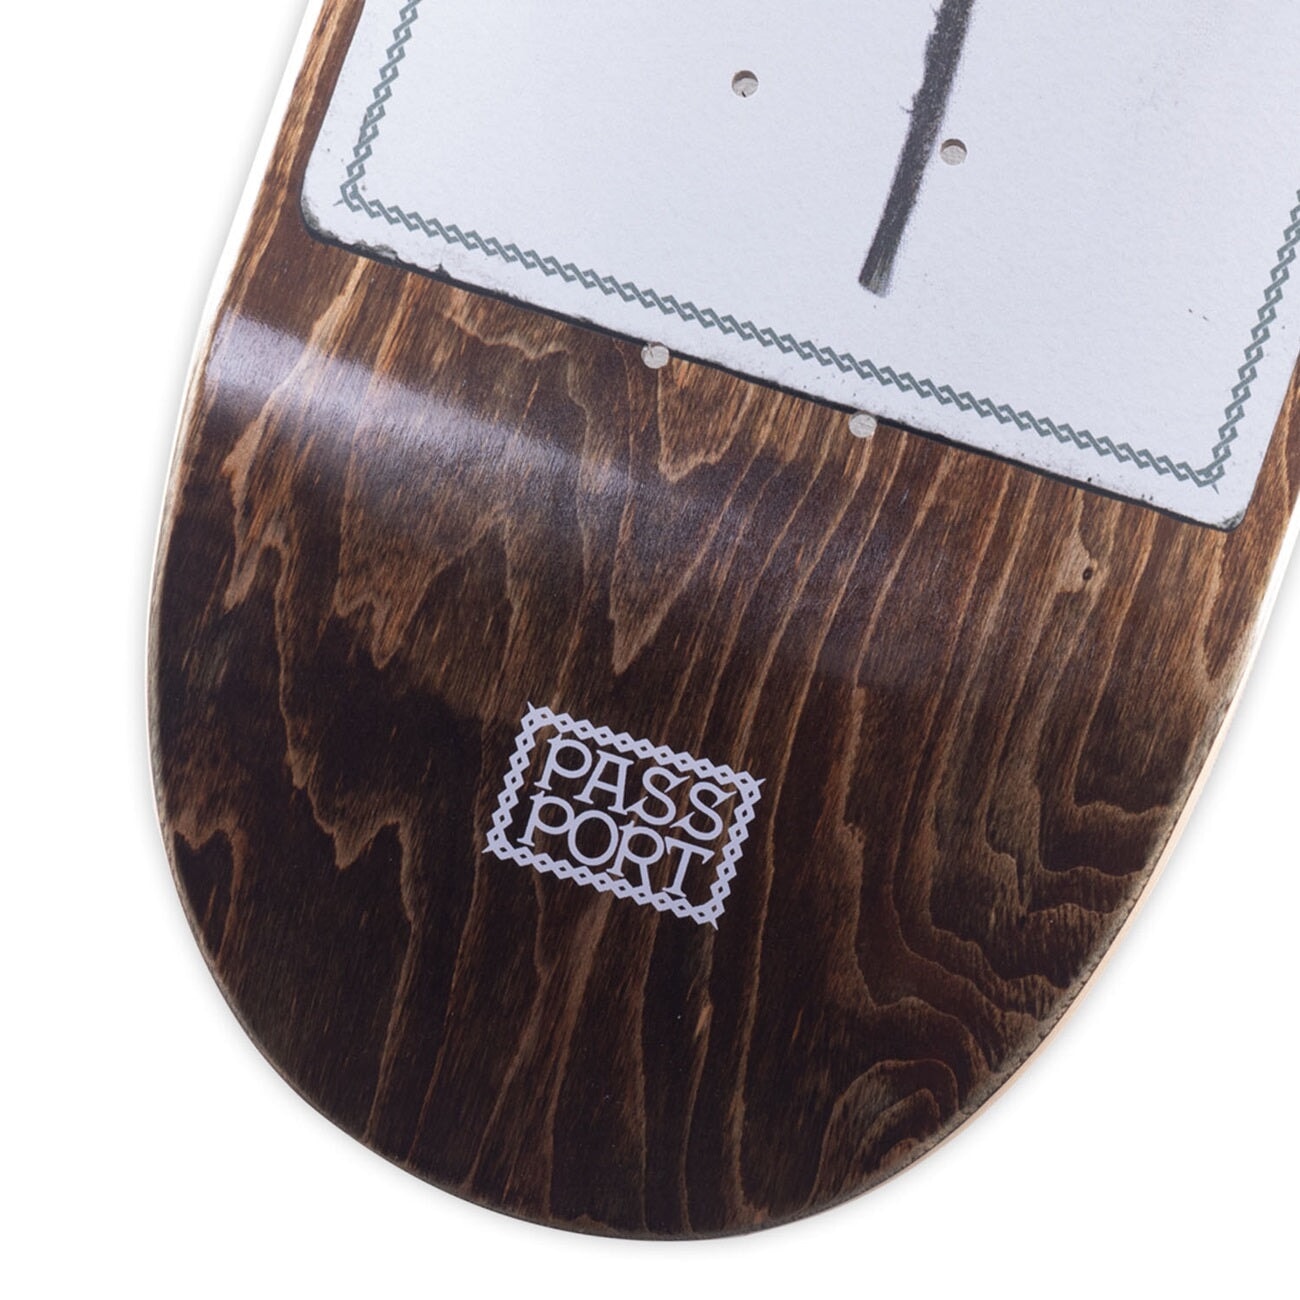 Pass~Port Invasive Species Scotch Thistle Deck - 8.5 Decks Passport Skateboards 